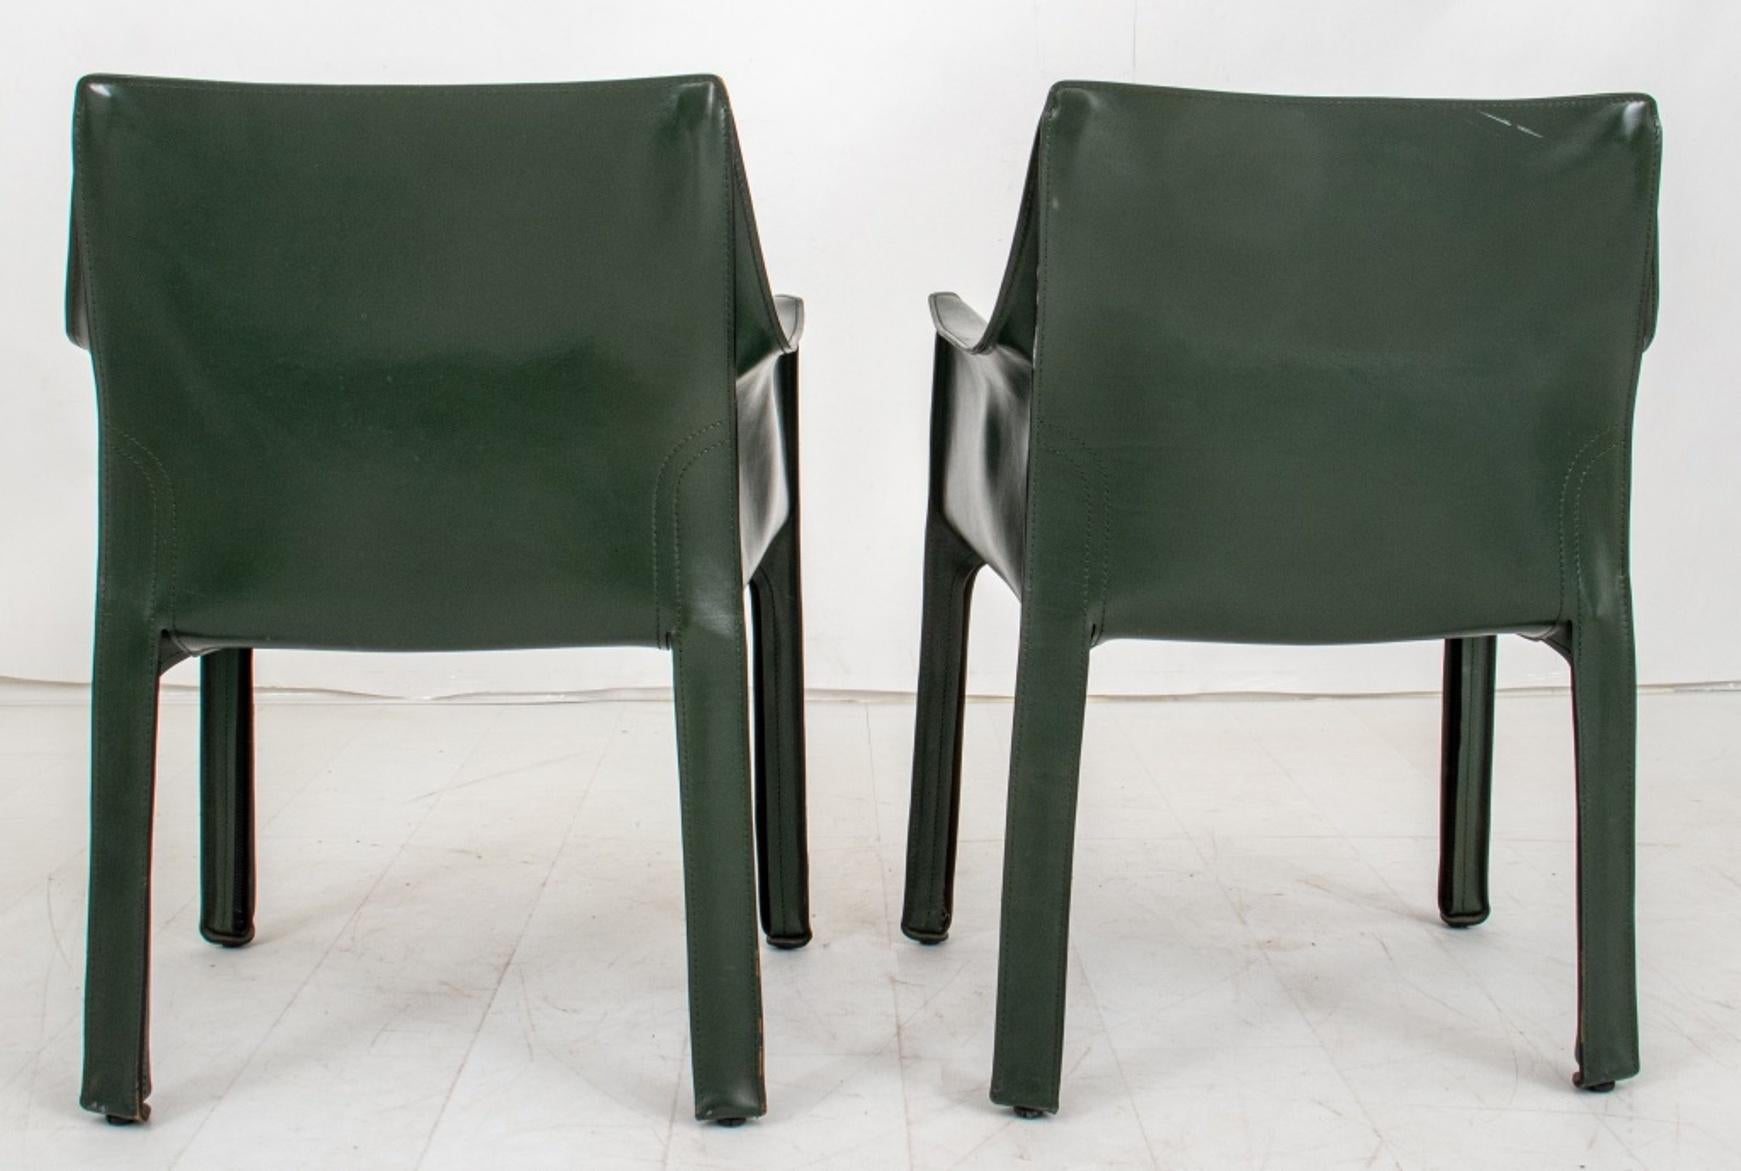 Contemporary Mario Bellini for Cassina Cab 413 Arm Chairs, Pair